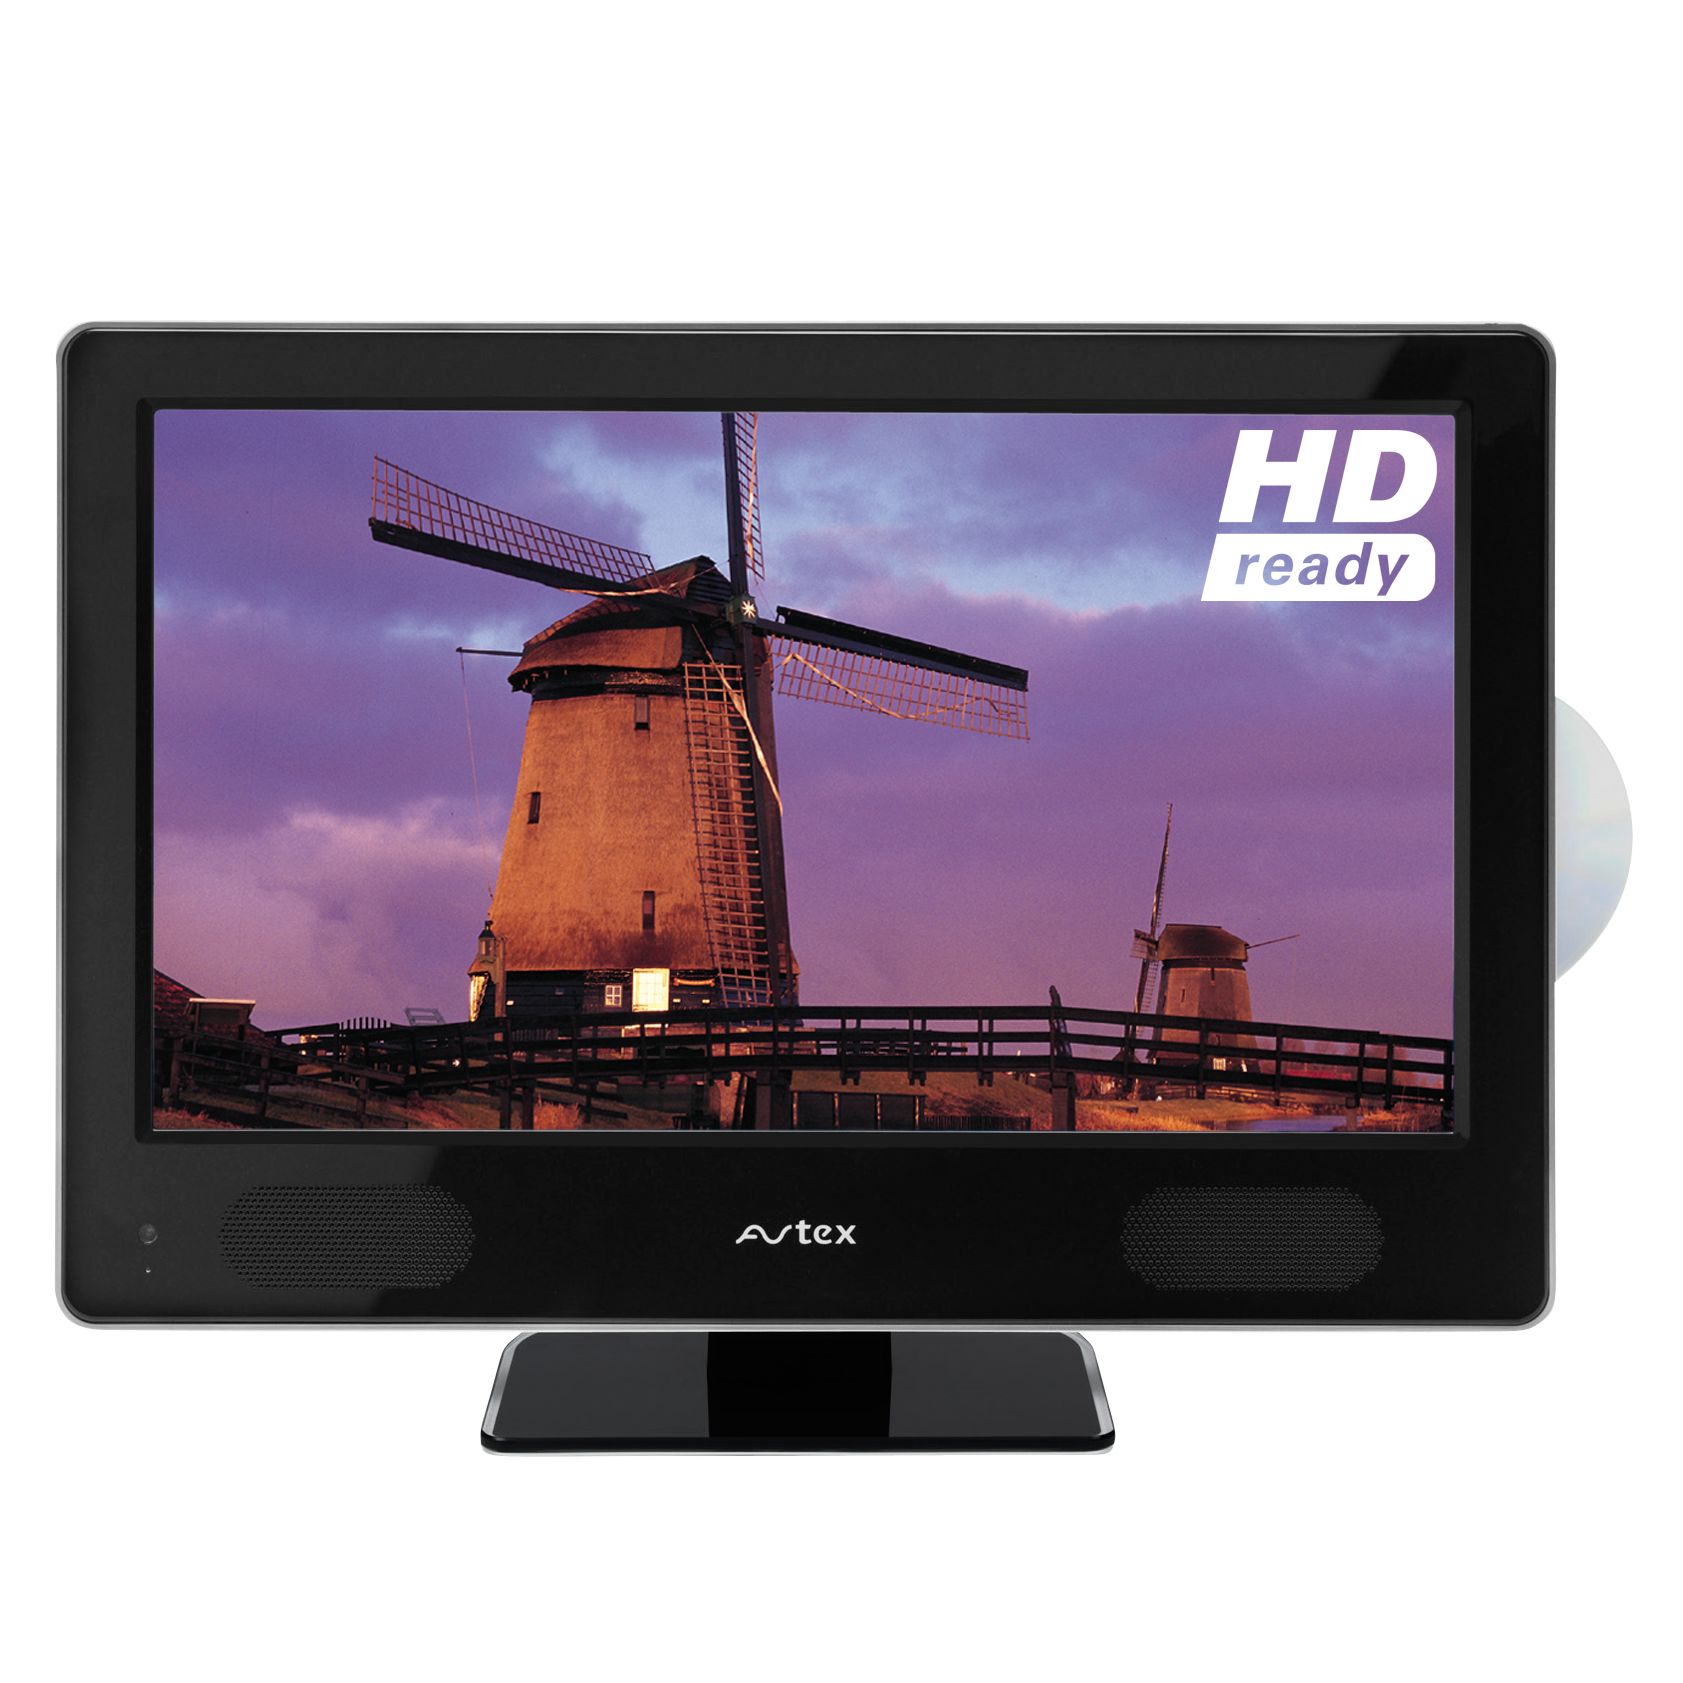 Avtex L185DR LED HD Ready Digital Television/DVD Combi, 18.5 Inch at John Lewis